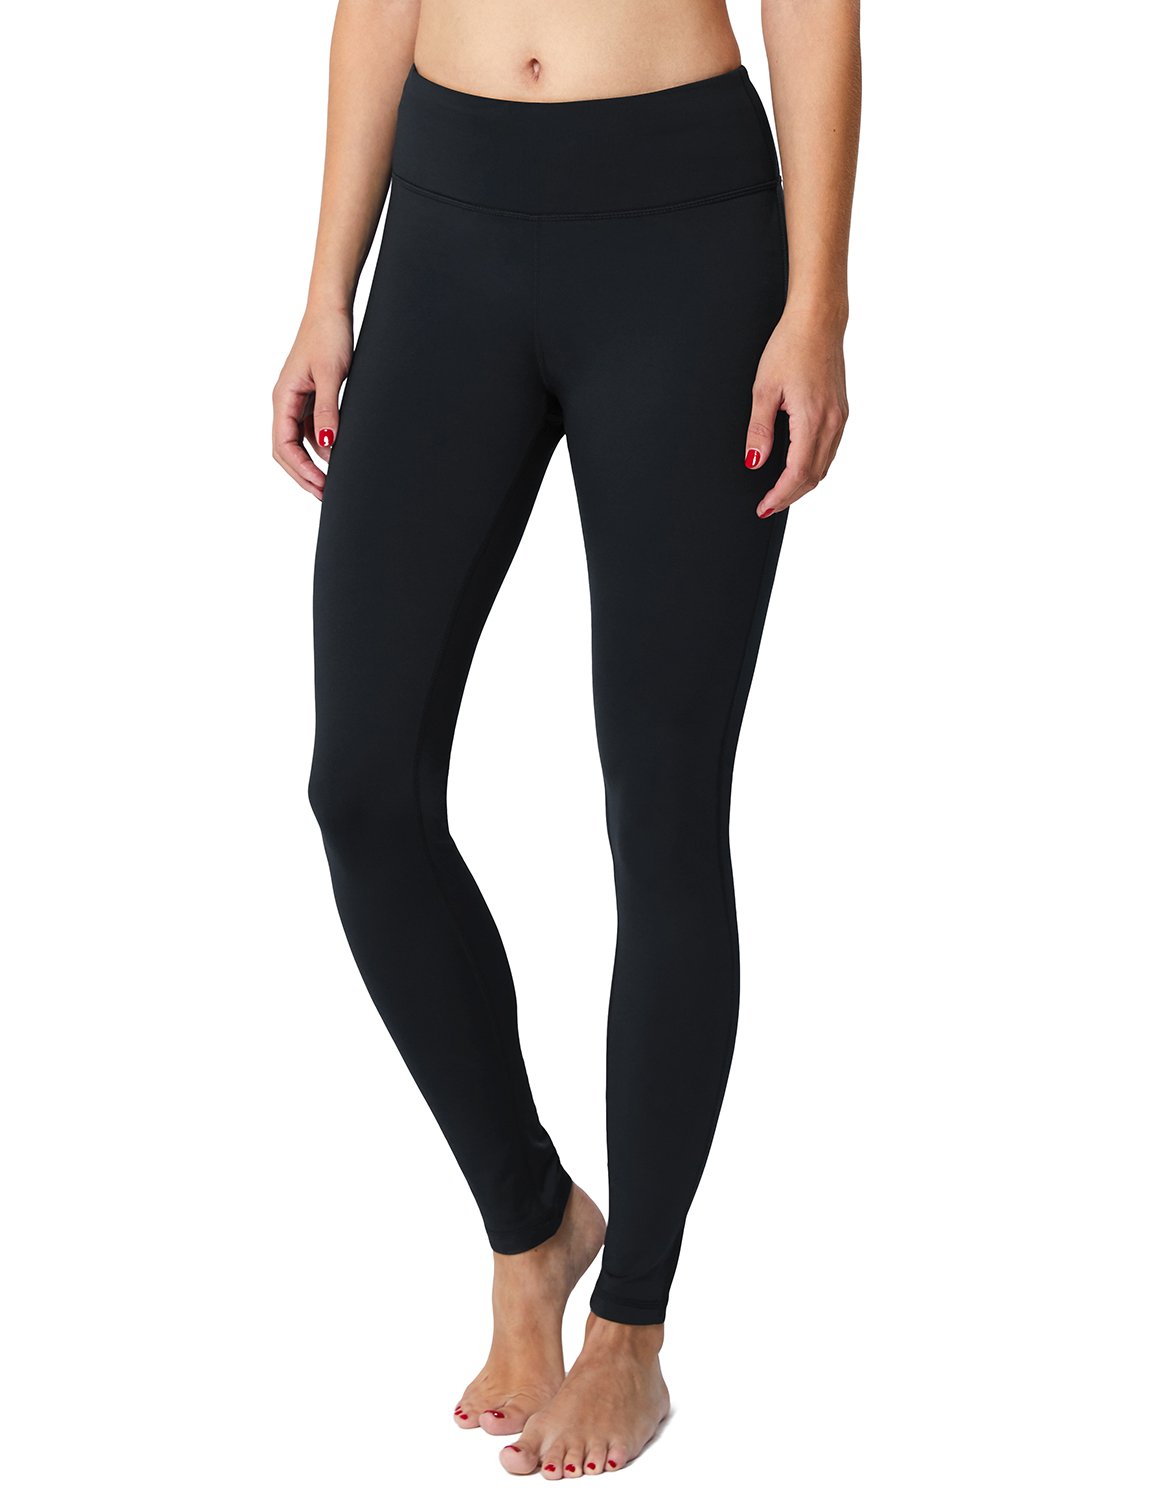 Baleaf Women's Fleece Lined Winter Leggings Thermal Yoga Pants Sweatpants Black Size S - image 1 of 6